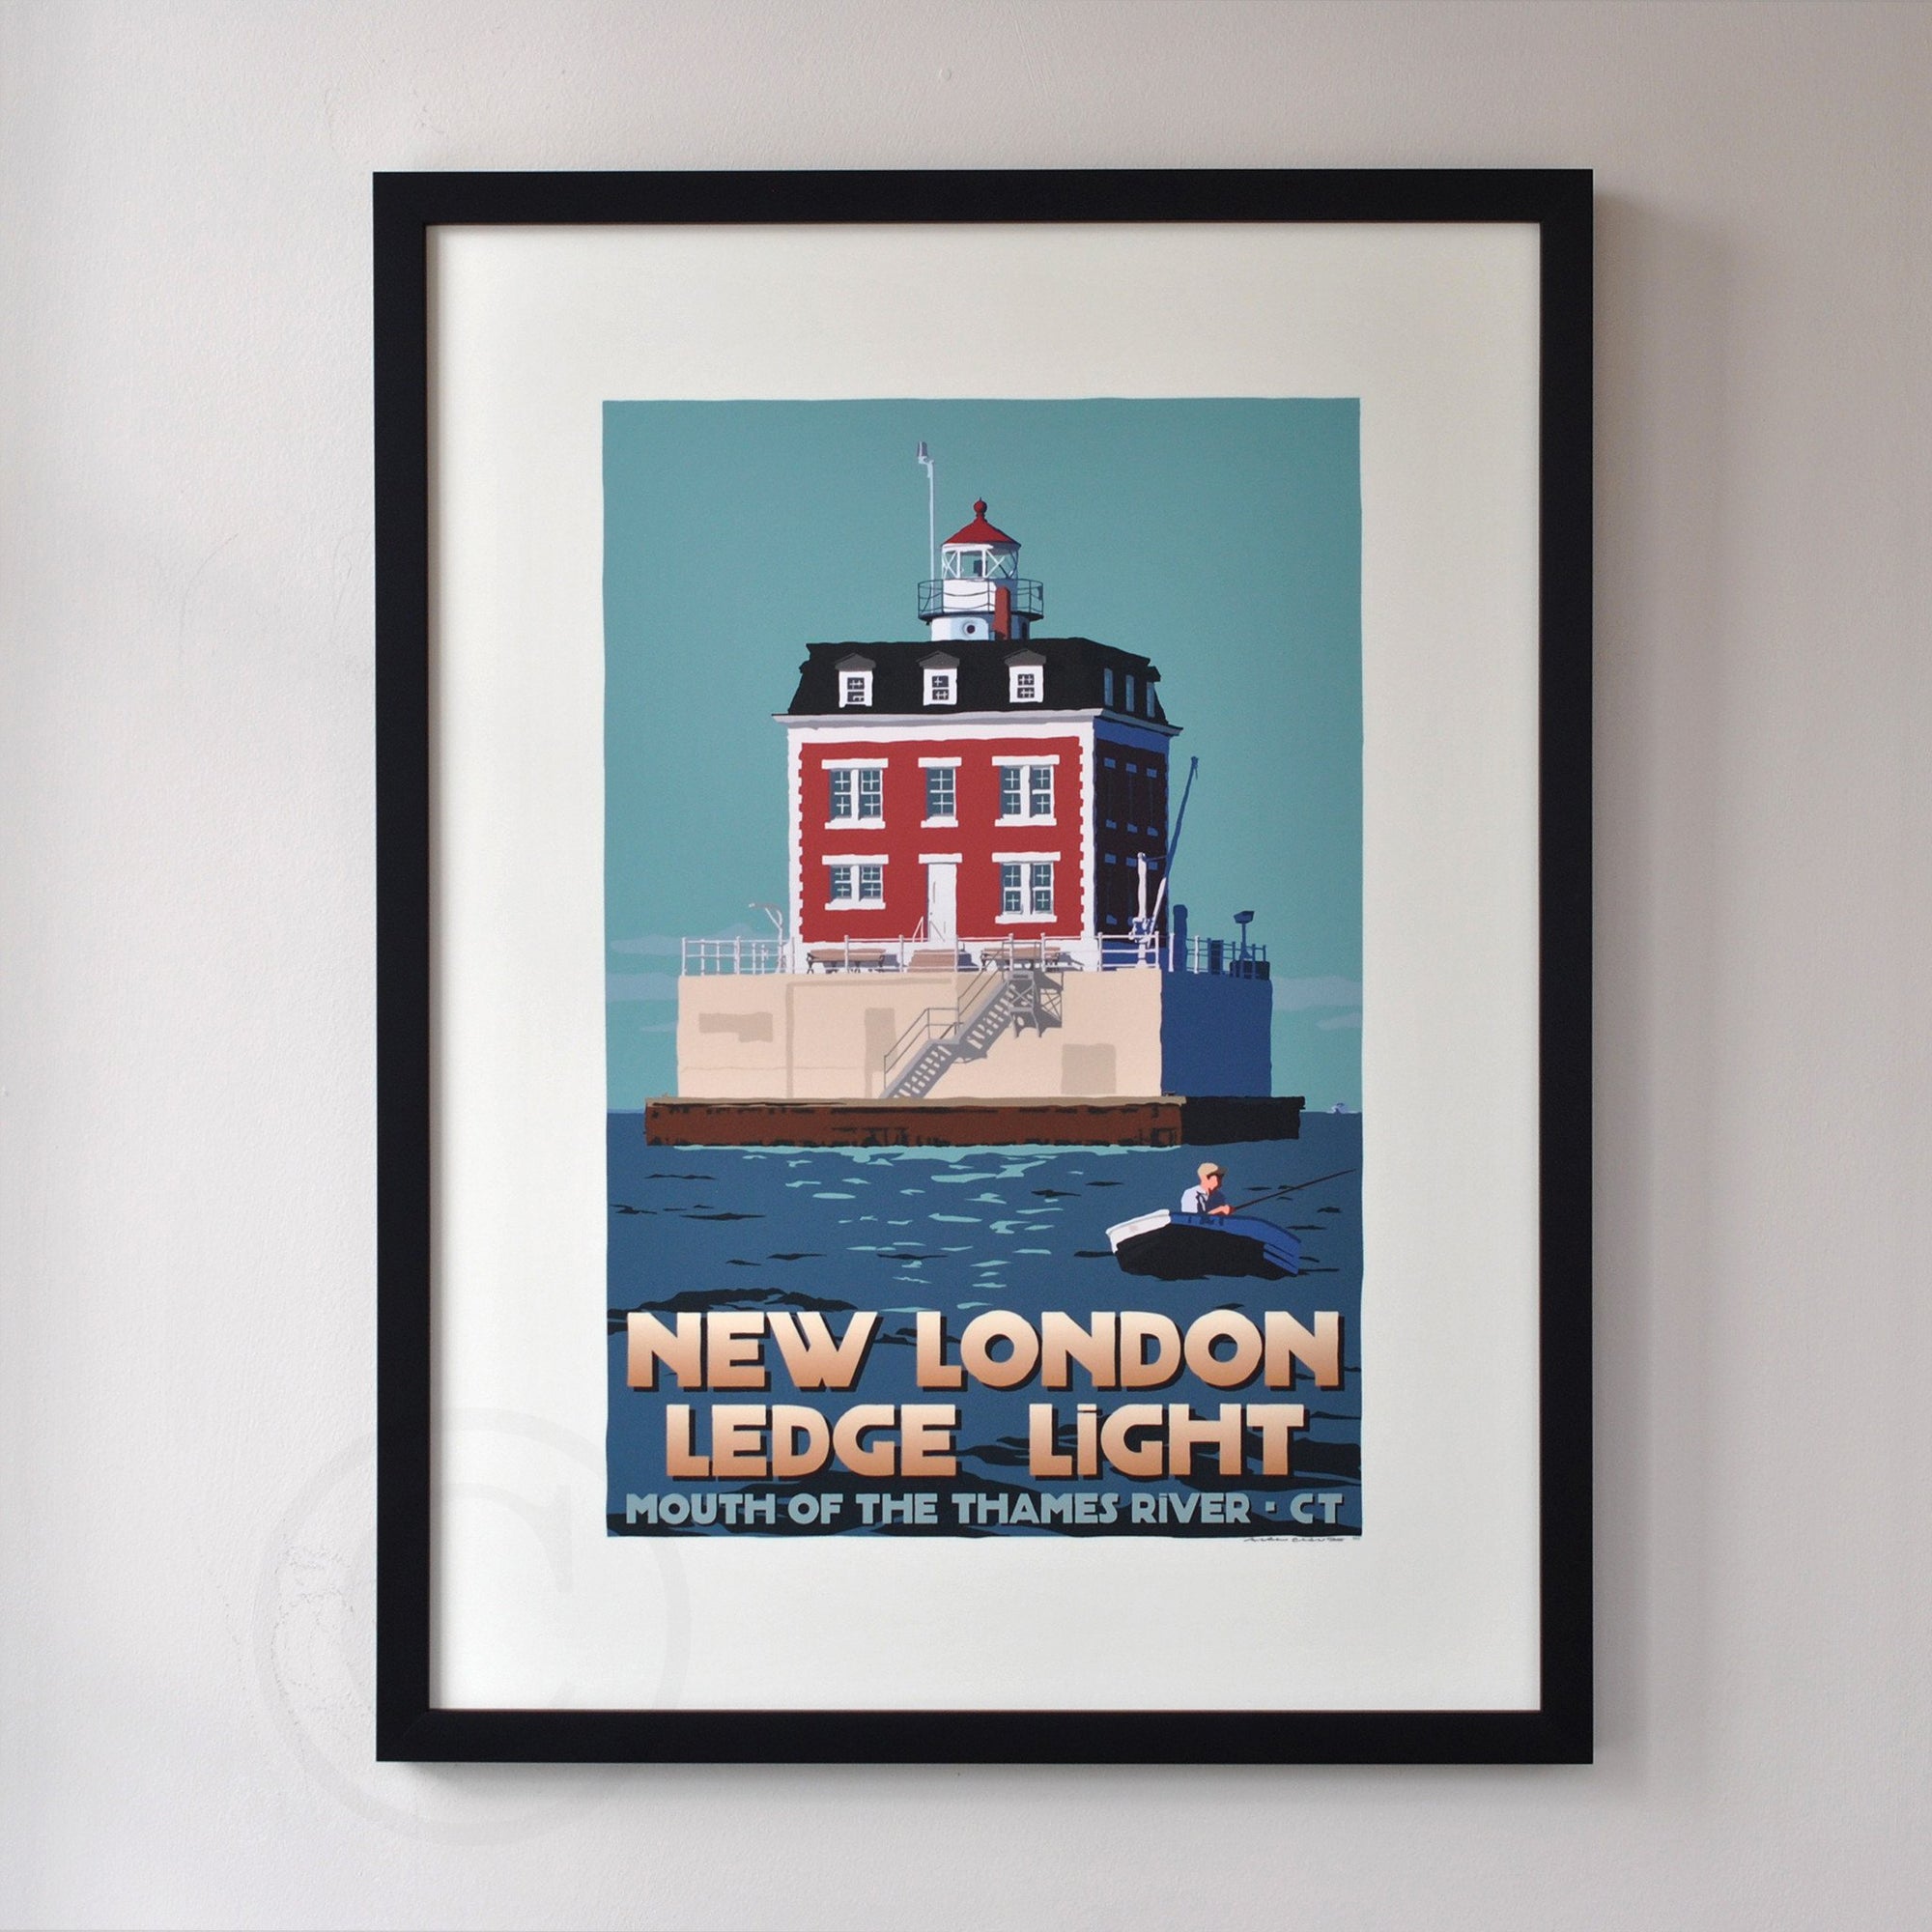 New London Ledge Light Art Print 18" x 24" Framed Travel Poster By Alan Claude - Connecticut